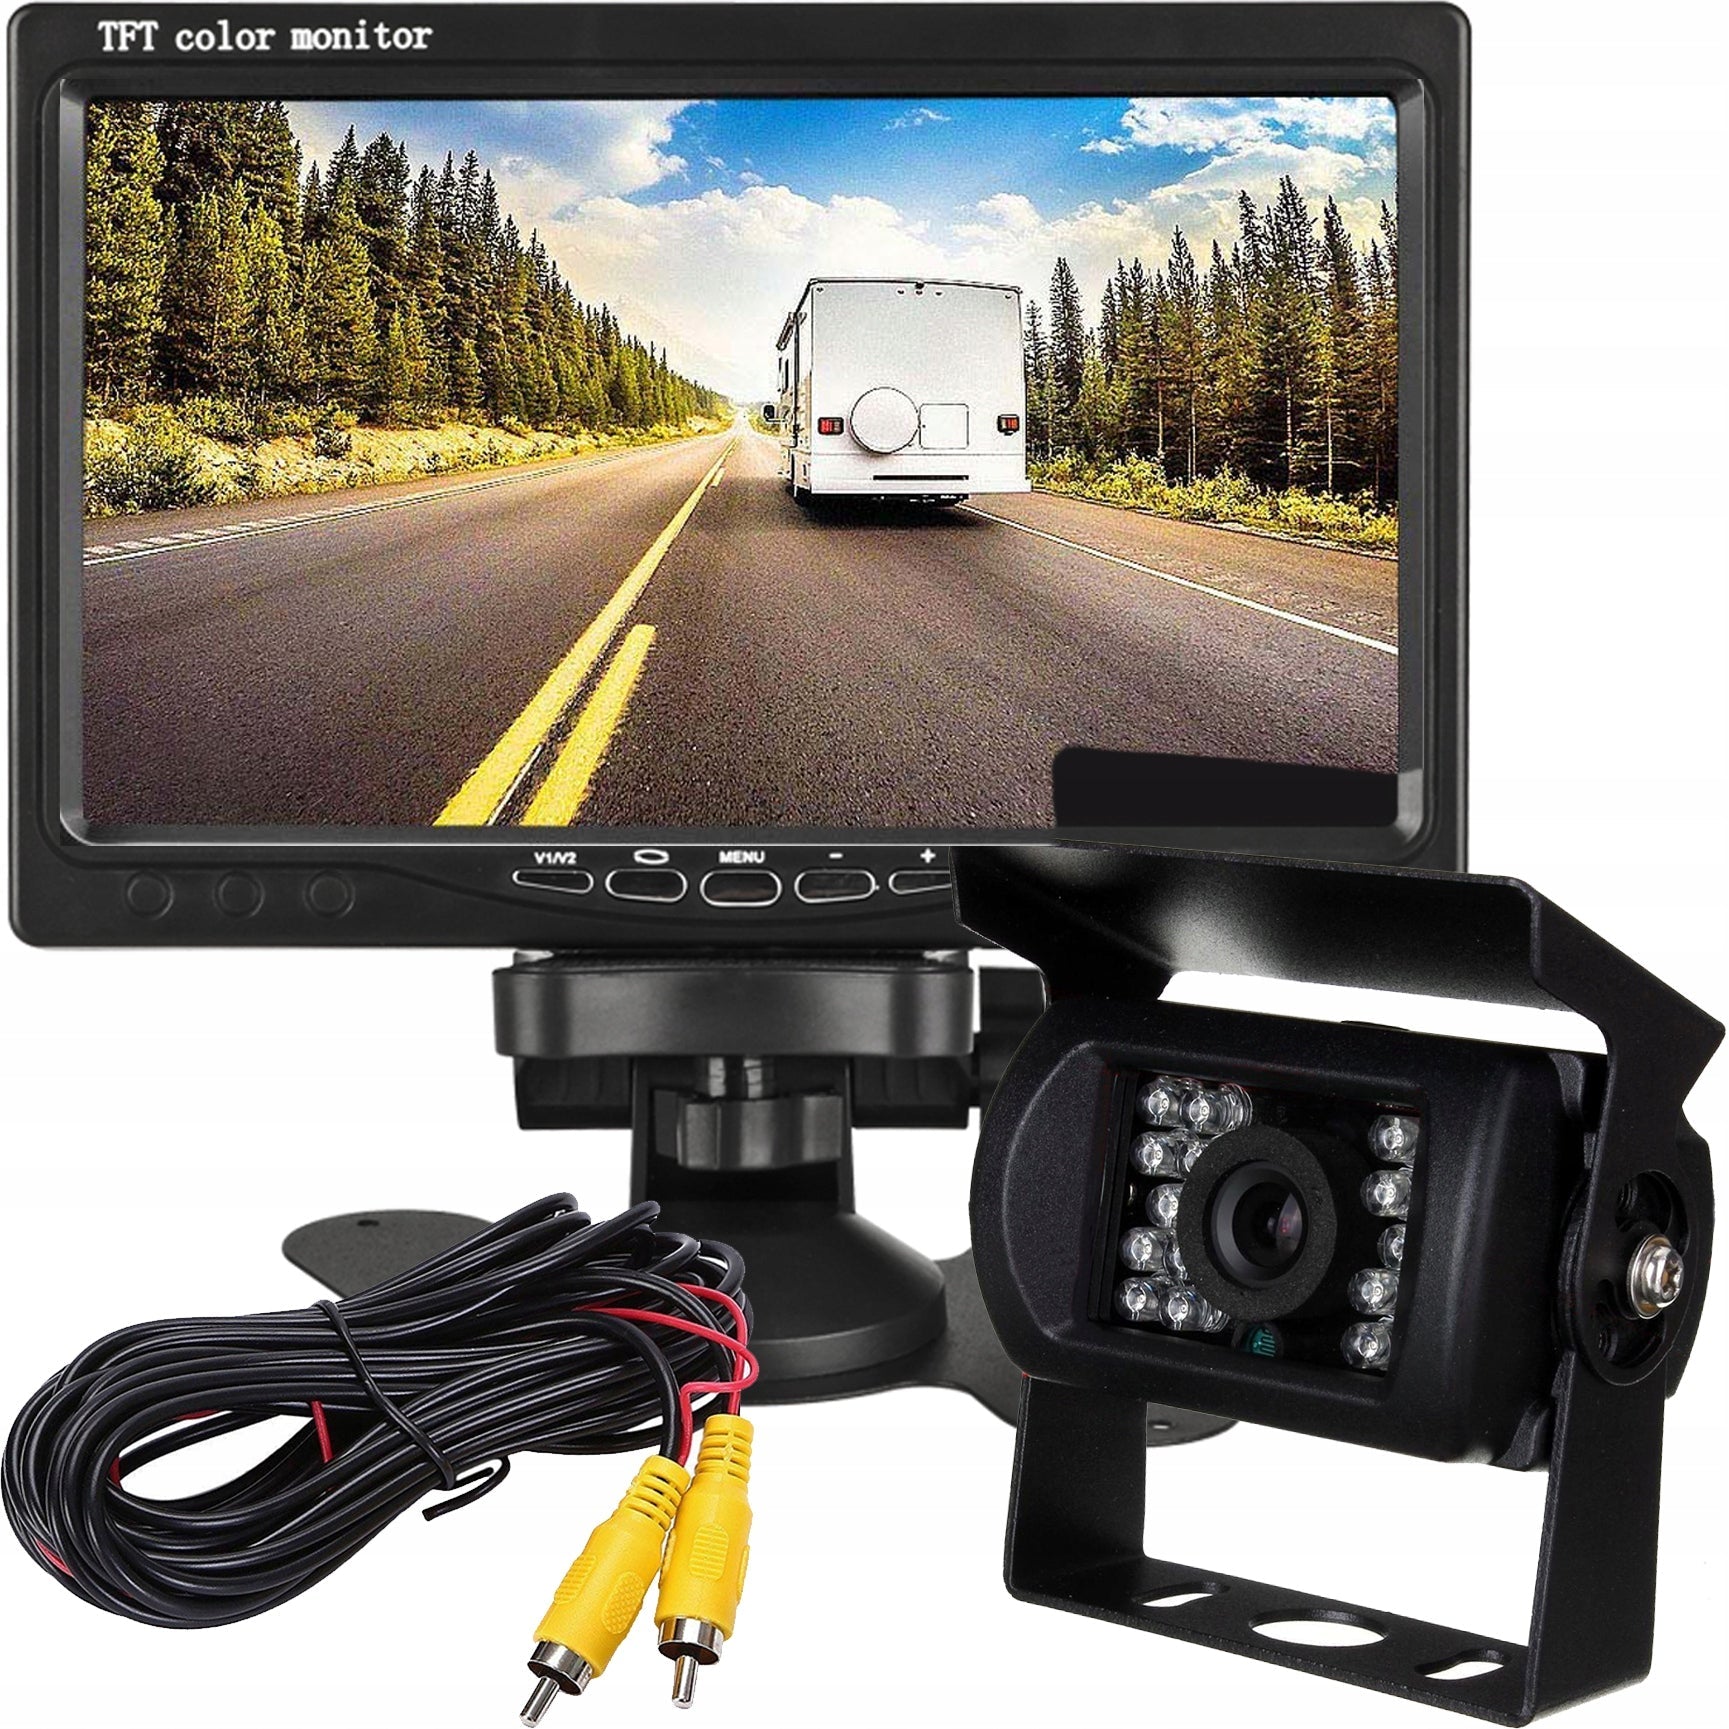 Ryggekamera For Buss Lastebil Led 18 Ir-Monitor 7'' 6M Bilkamera Pro